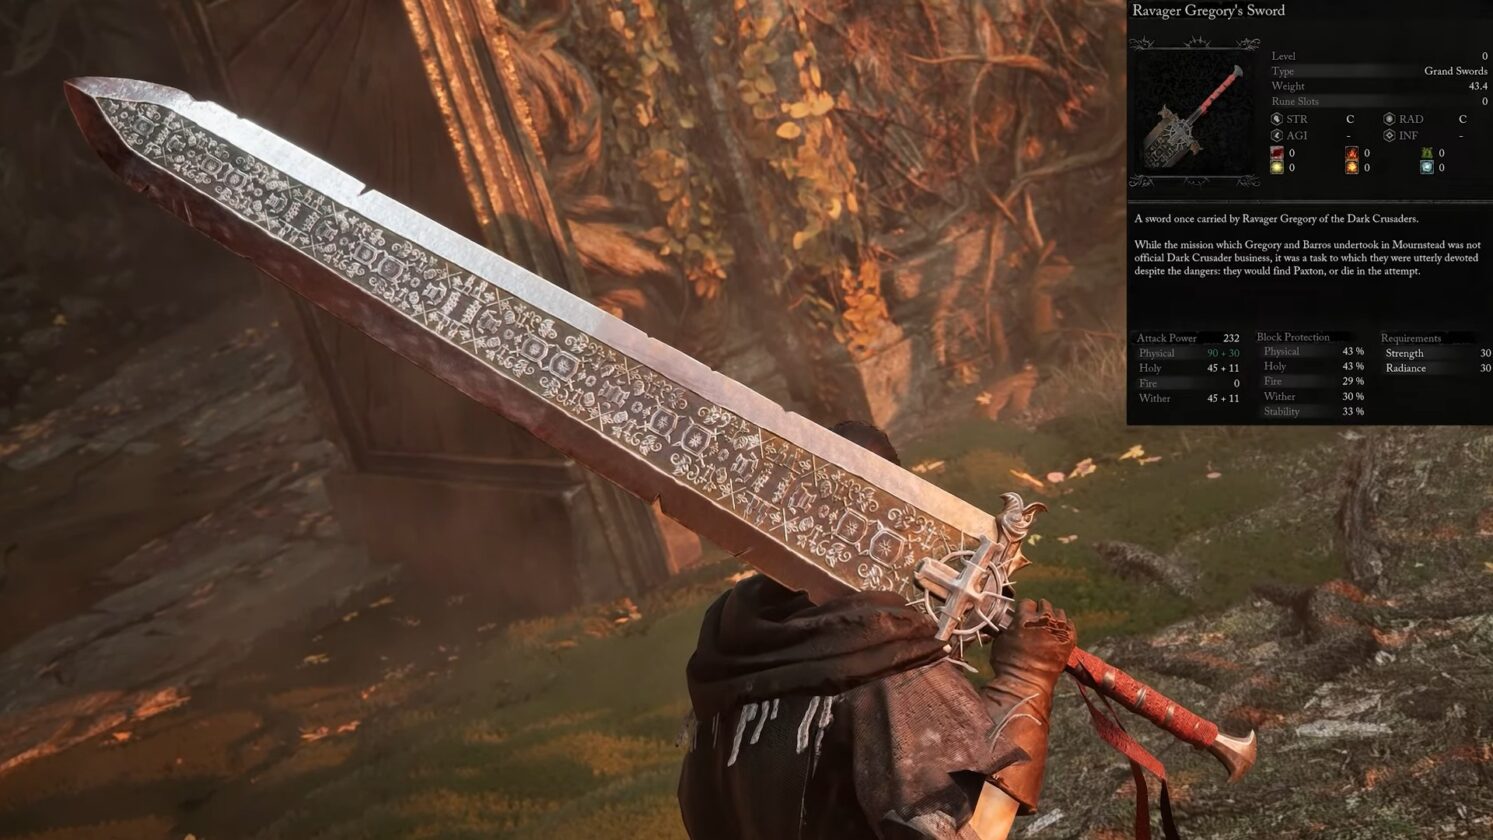 Ravager Gregory's Sword